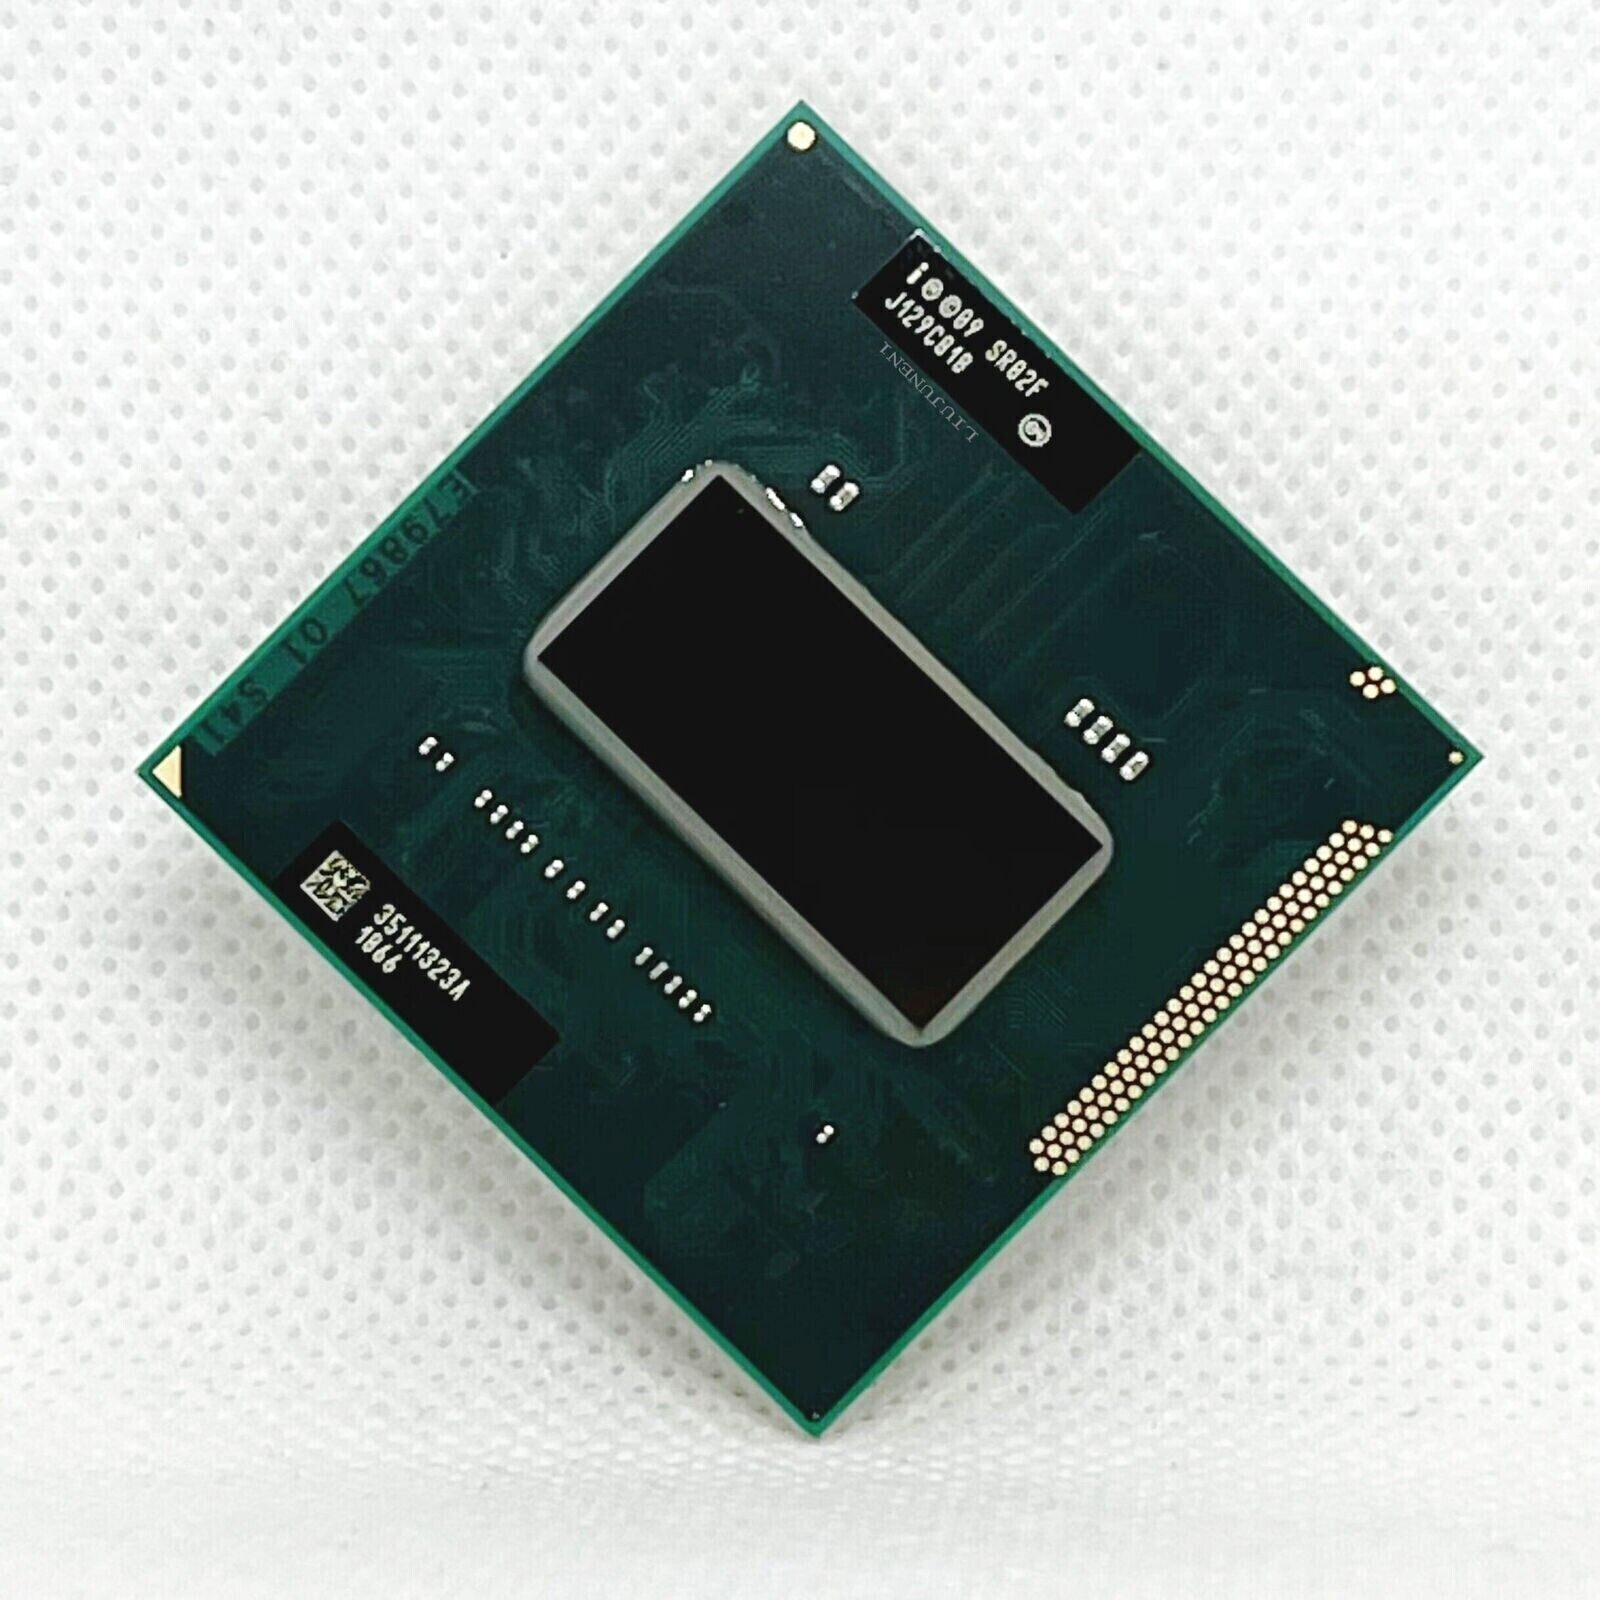 Intel Core Extreme i7-2960XM 2.7GHz Quad Core 8MB PGA988 SR02F Notebook CPU